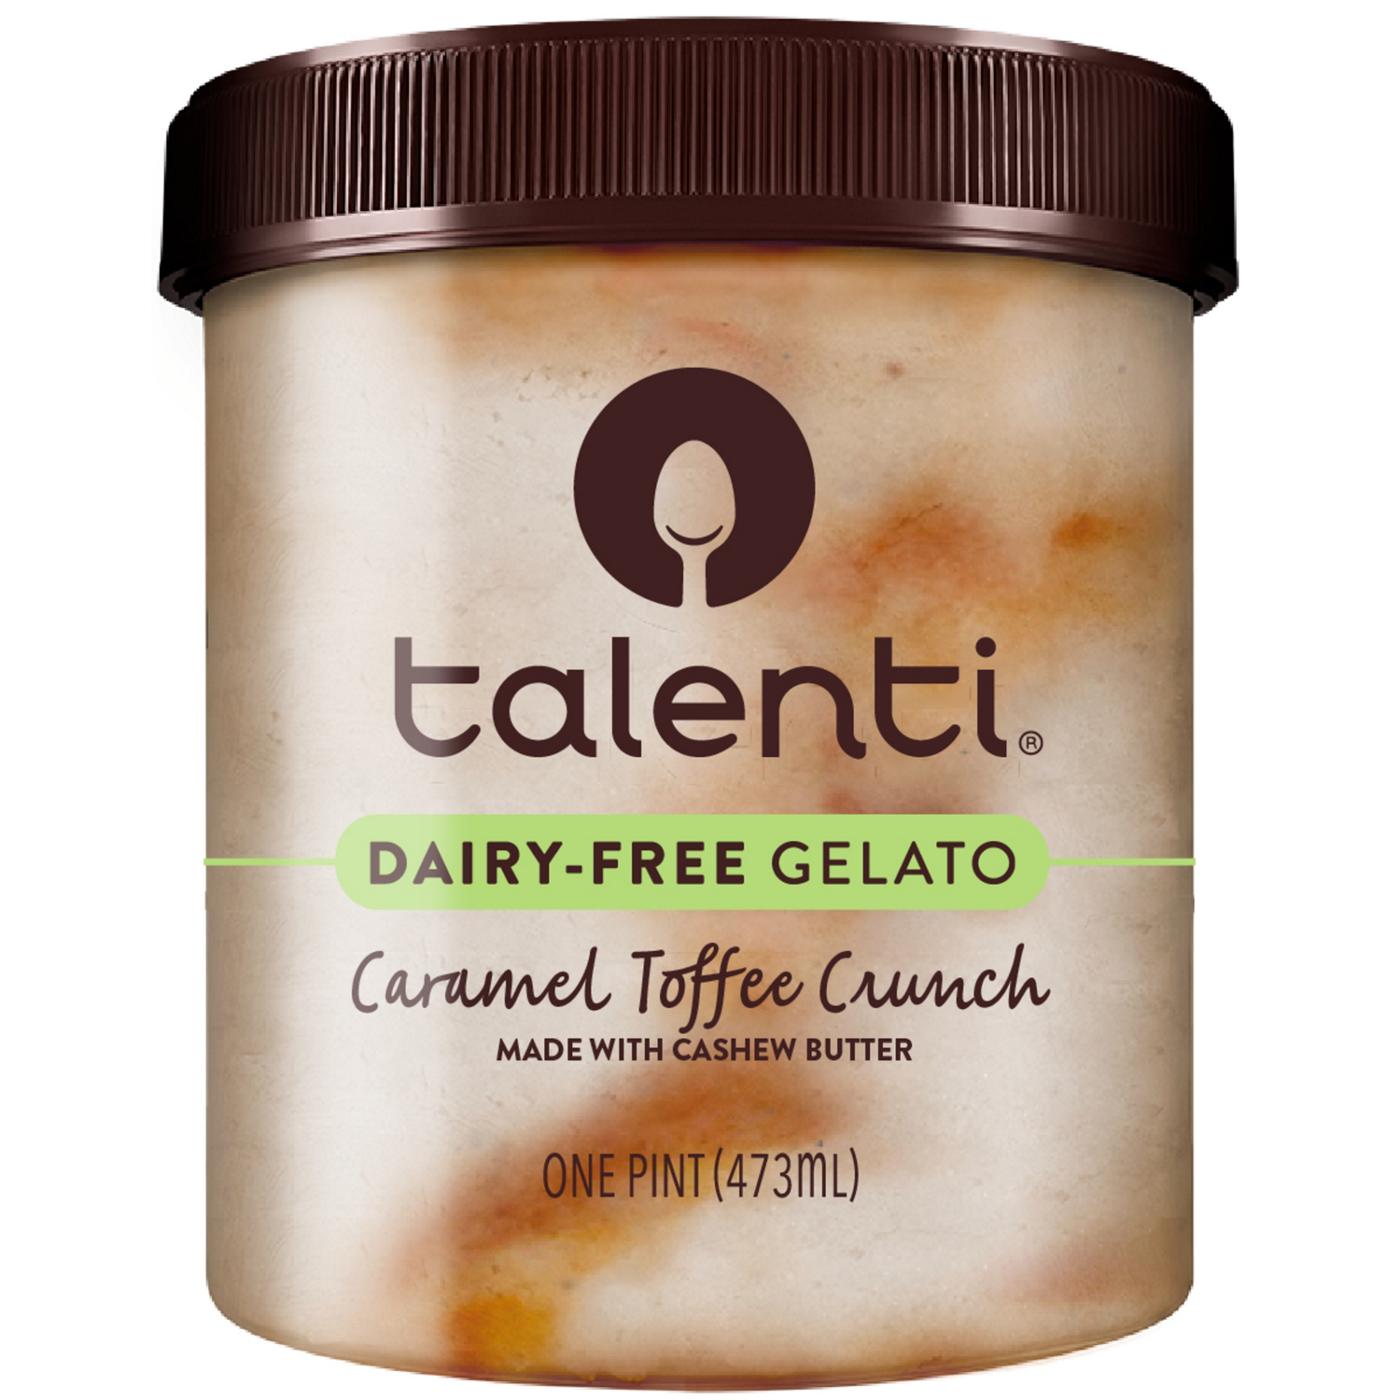 Talenti Dairy-Free Gelato Caramel Toffee Crunch; image 1 of 2